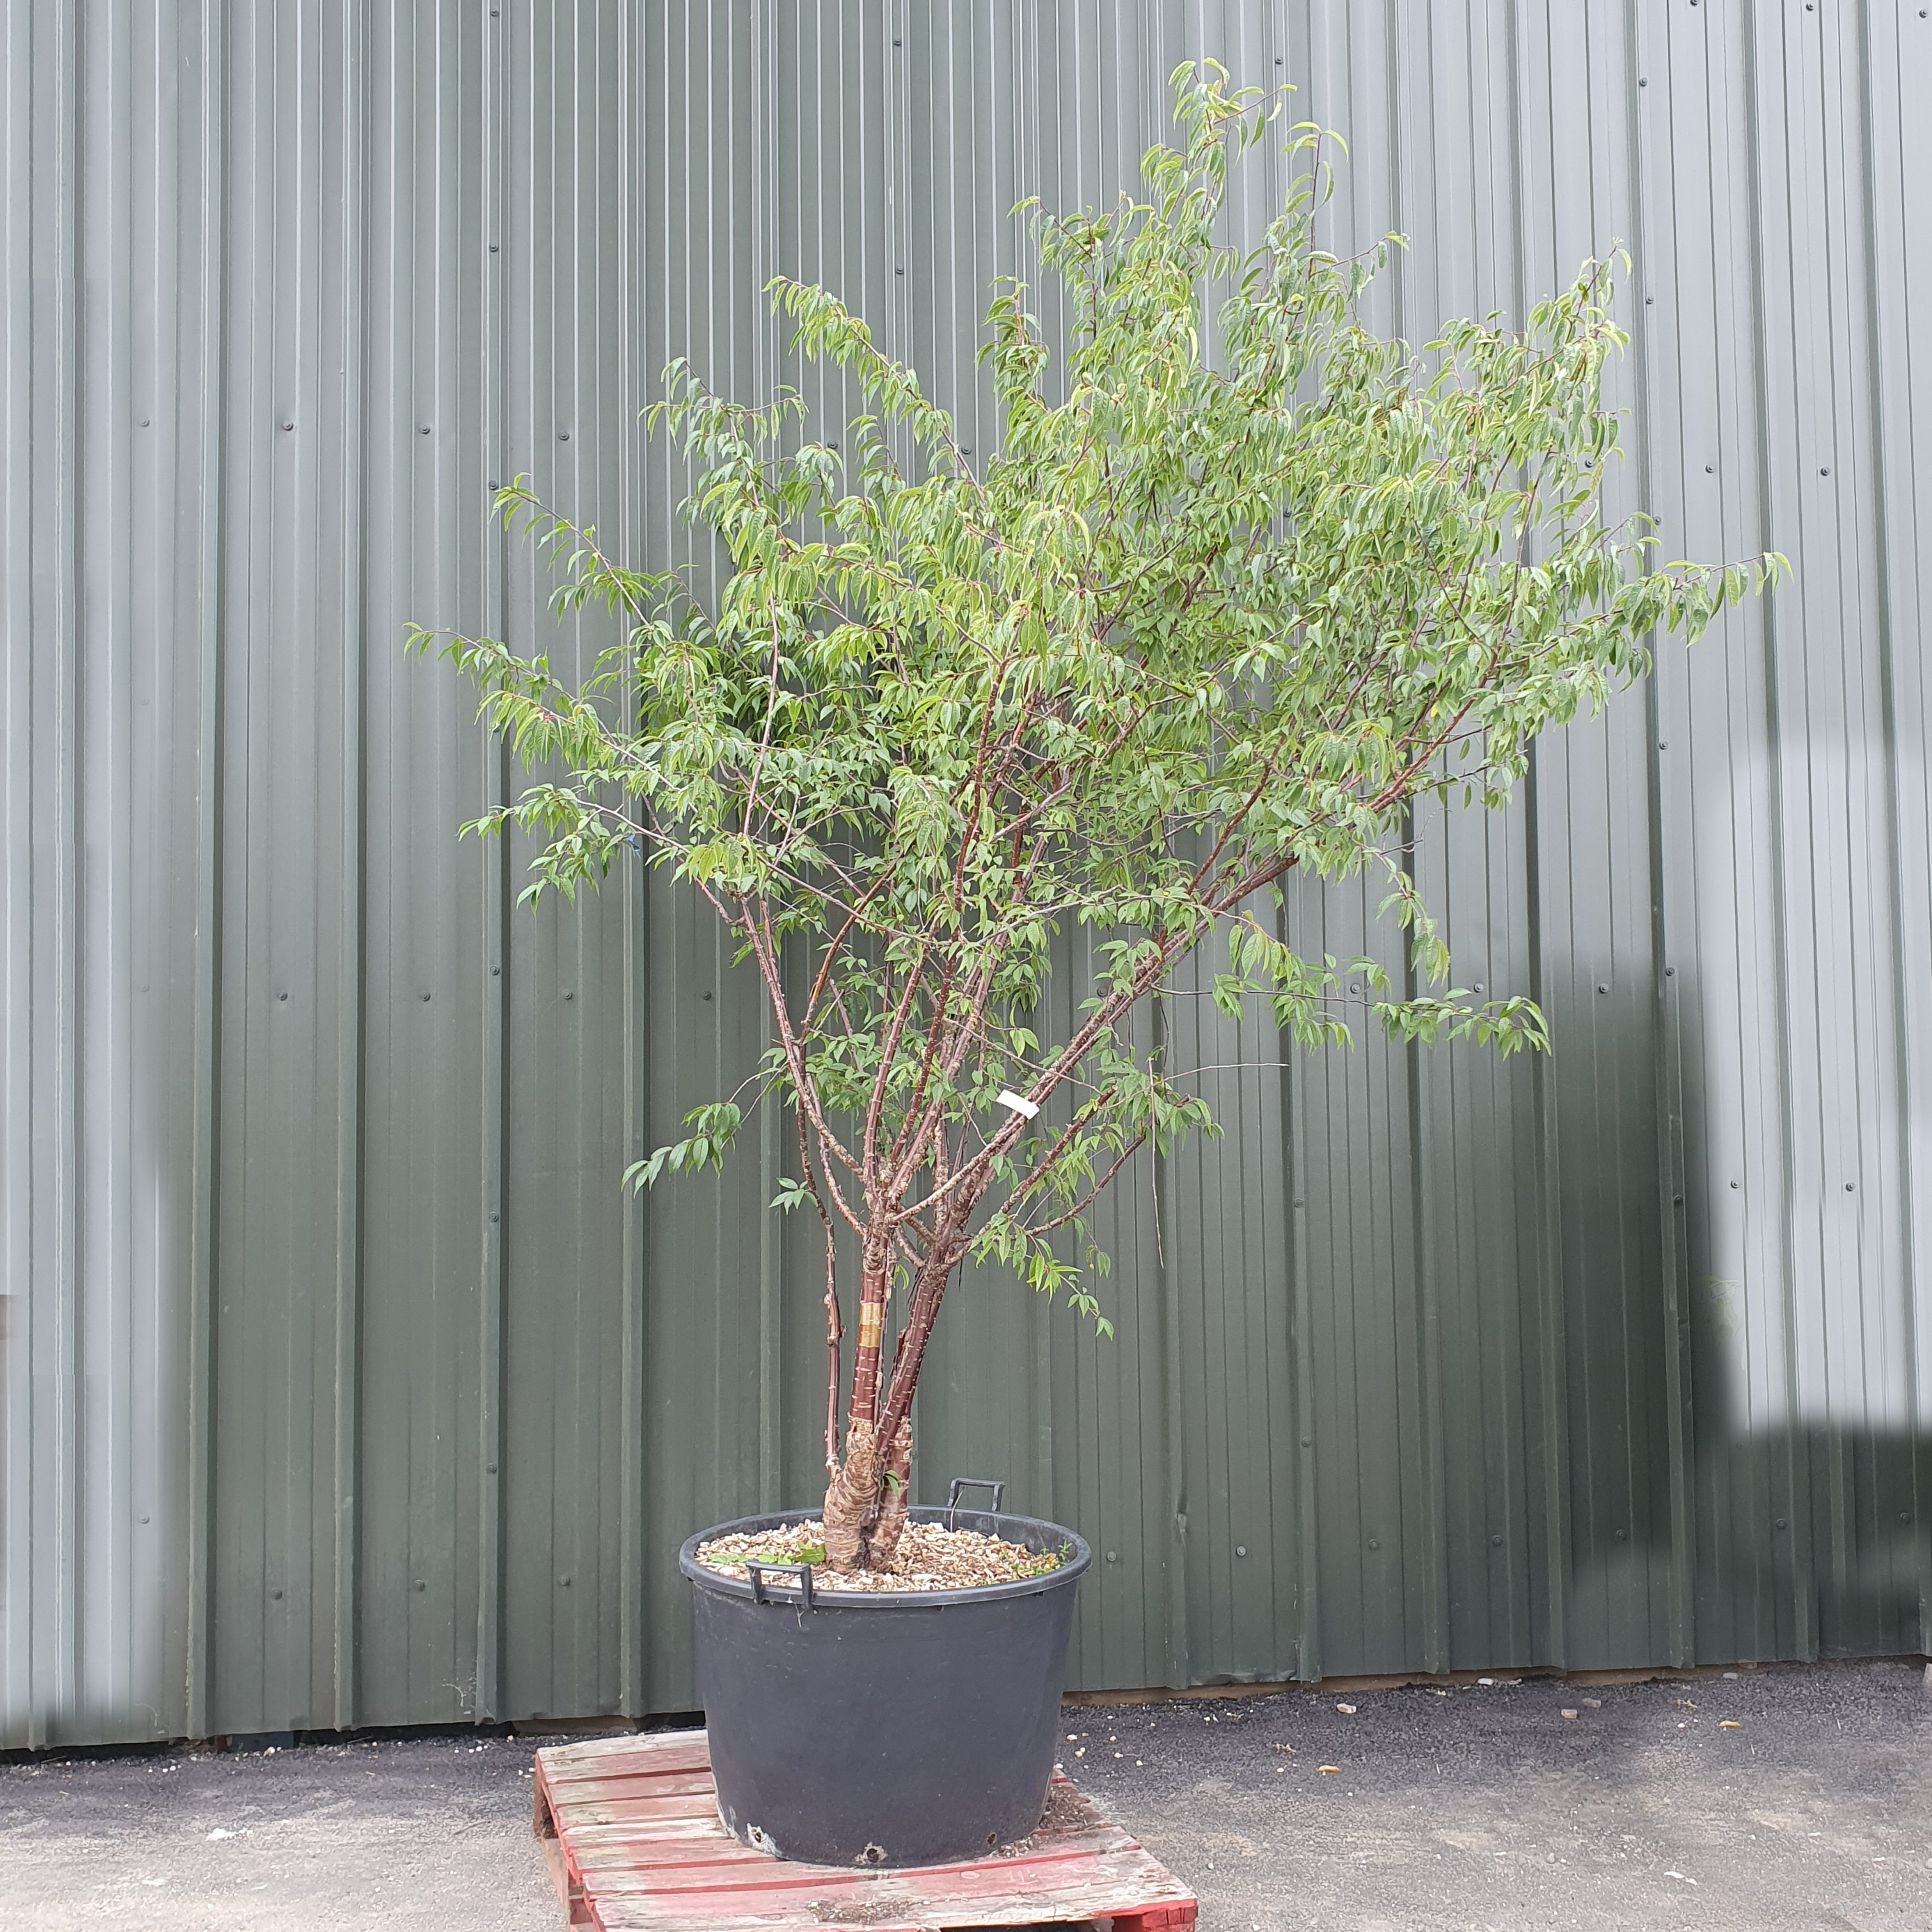 Prunus serrula Tibetica - Tibetan Cherry Large Multi-stem